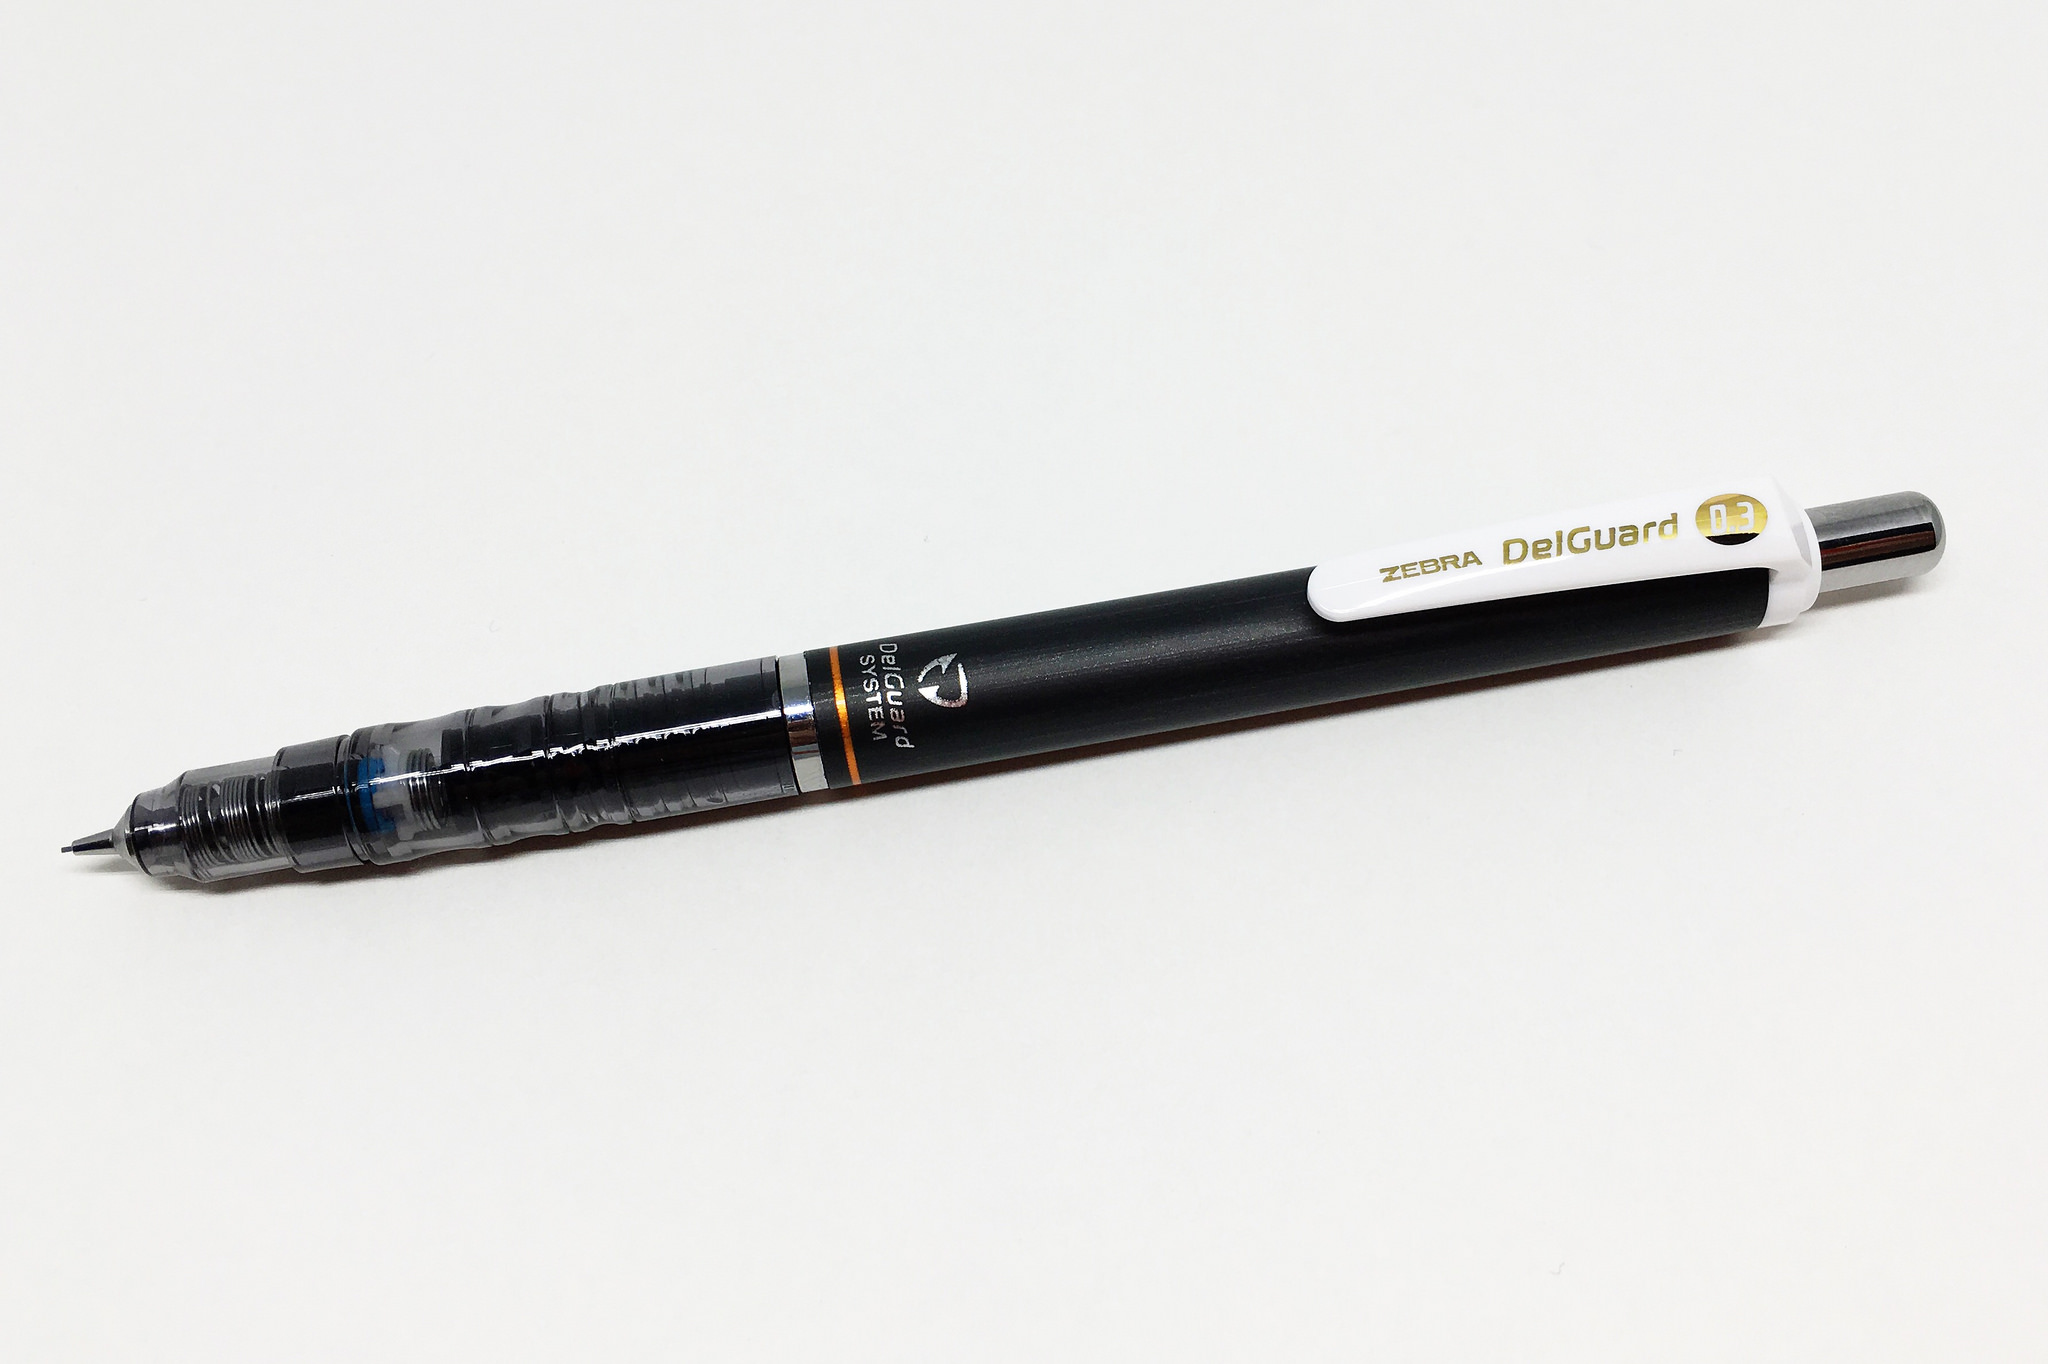 Zebra P-MAS86-W Mechanical Pencil Delguard Type Lx 0.3mm White New 